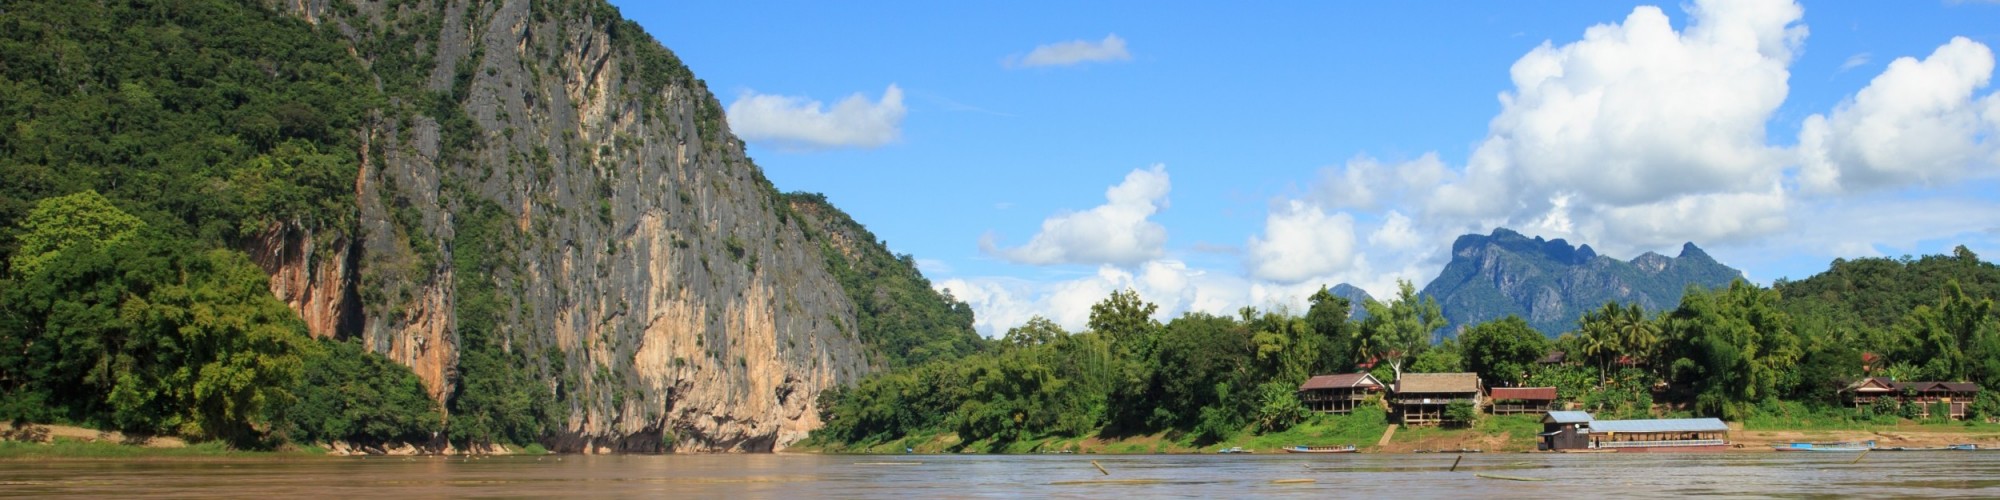 Nam Ou area on the Mekong River located near Pak Ou Cave, Luang Prabang, Laos